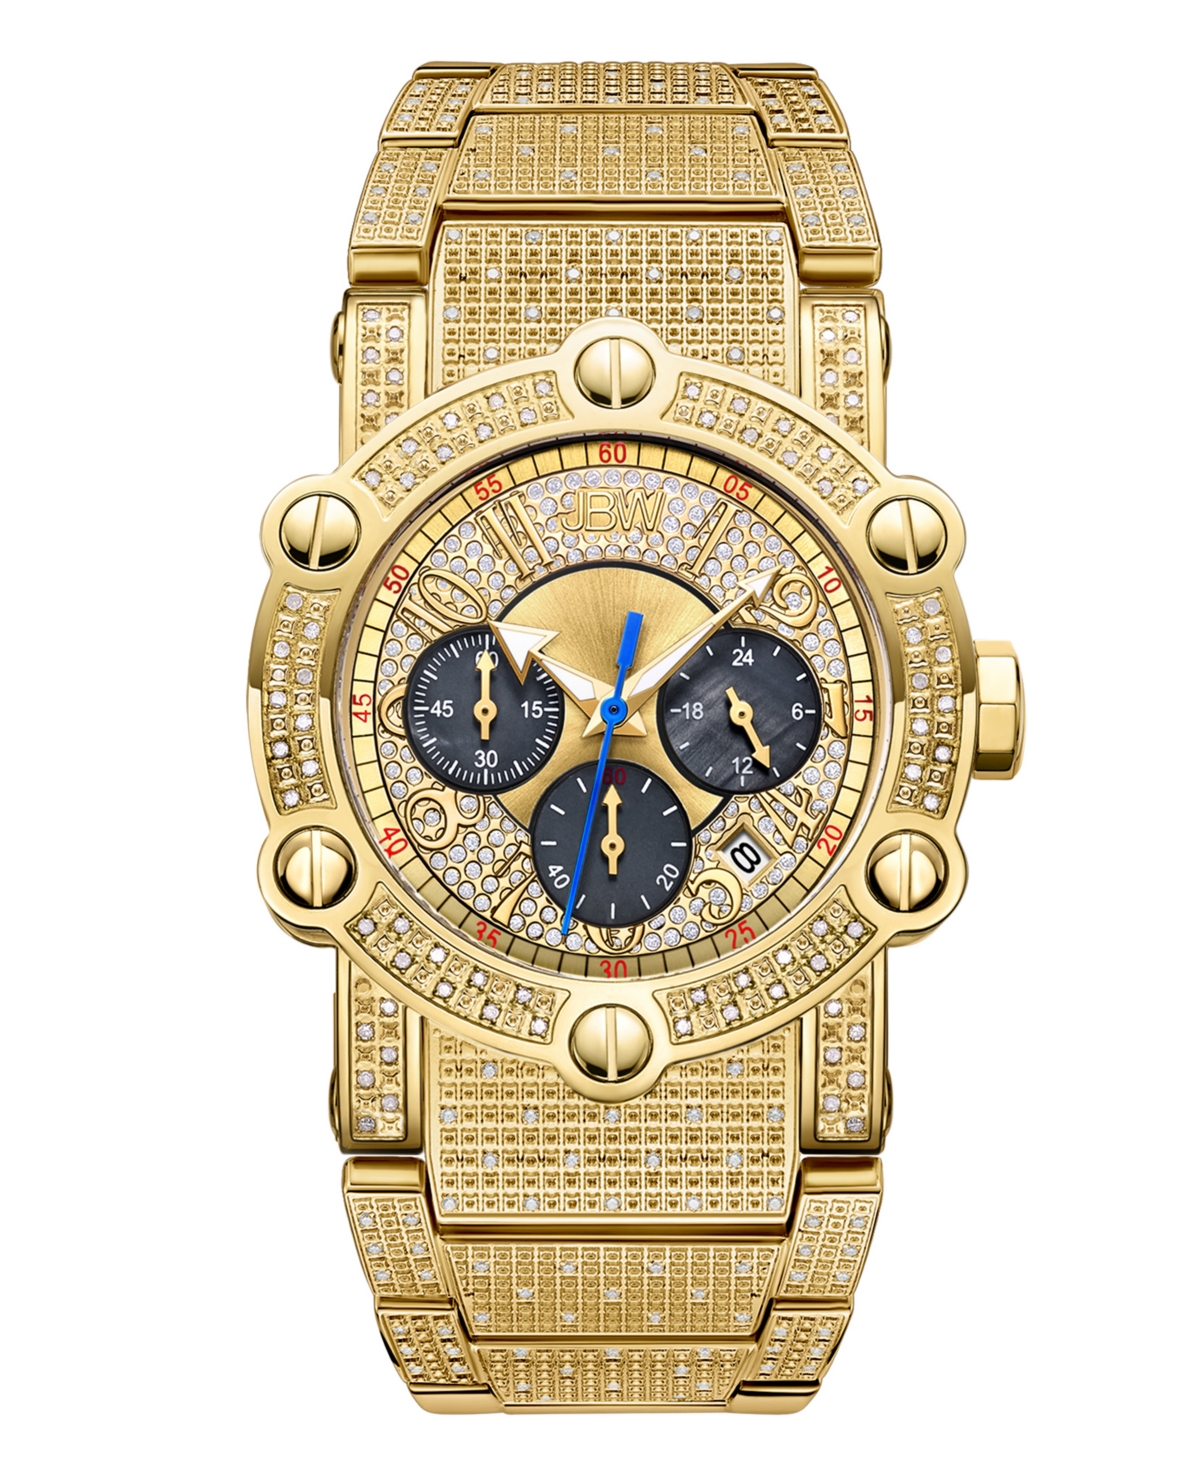 Jbw Men's Luxury Phantom 18k Gold-plated Stainless Steel Bracelet Watch, 42mm